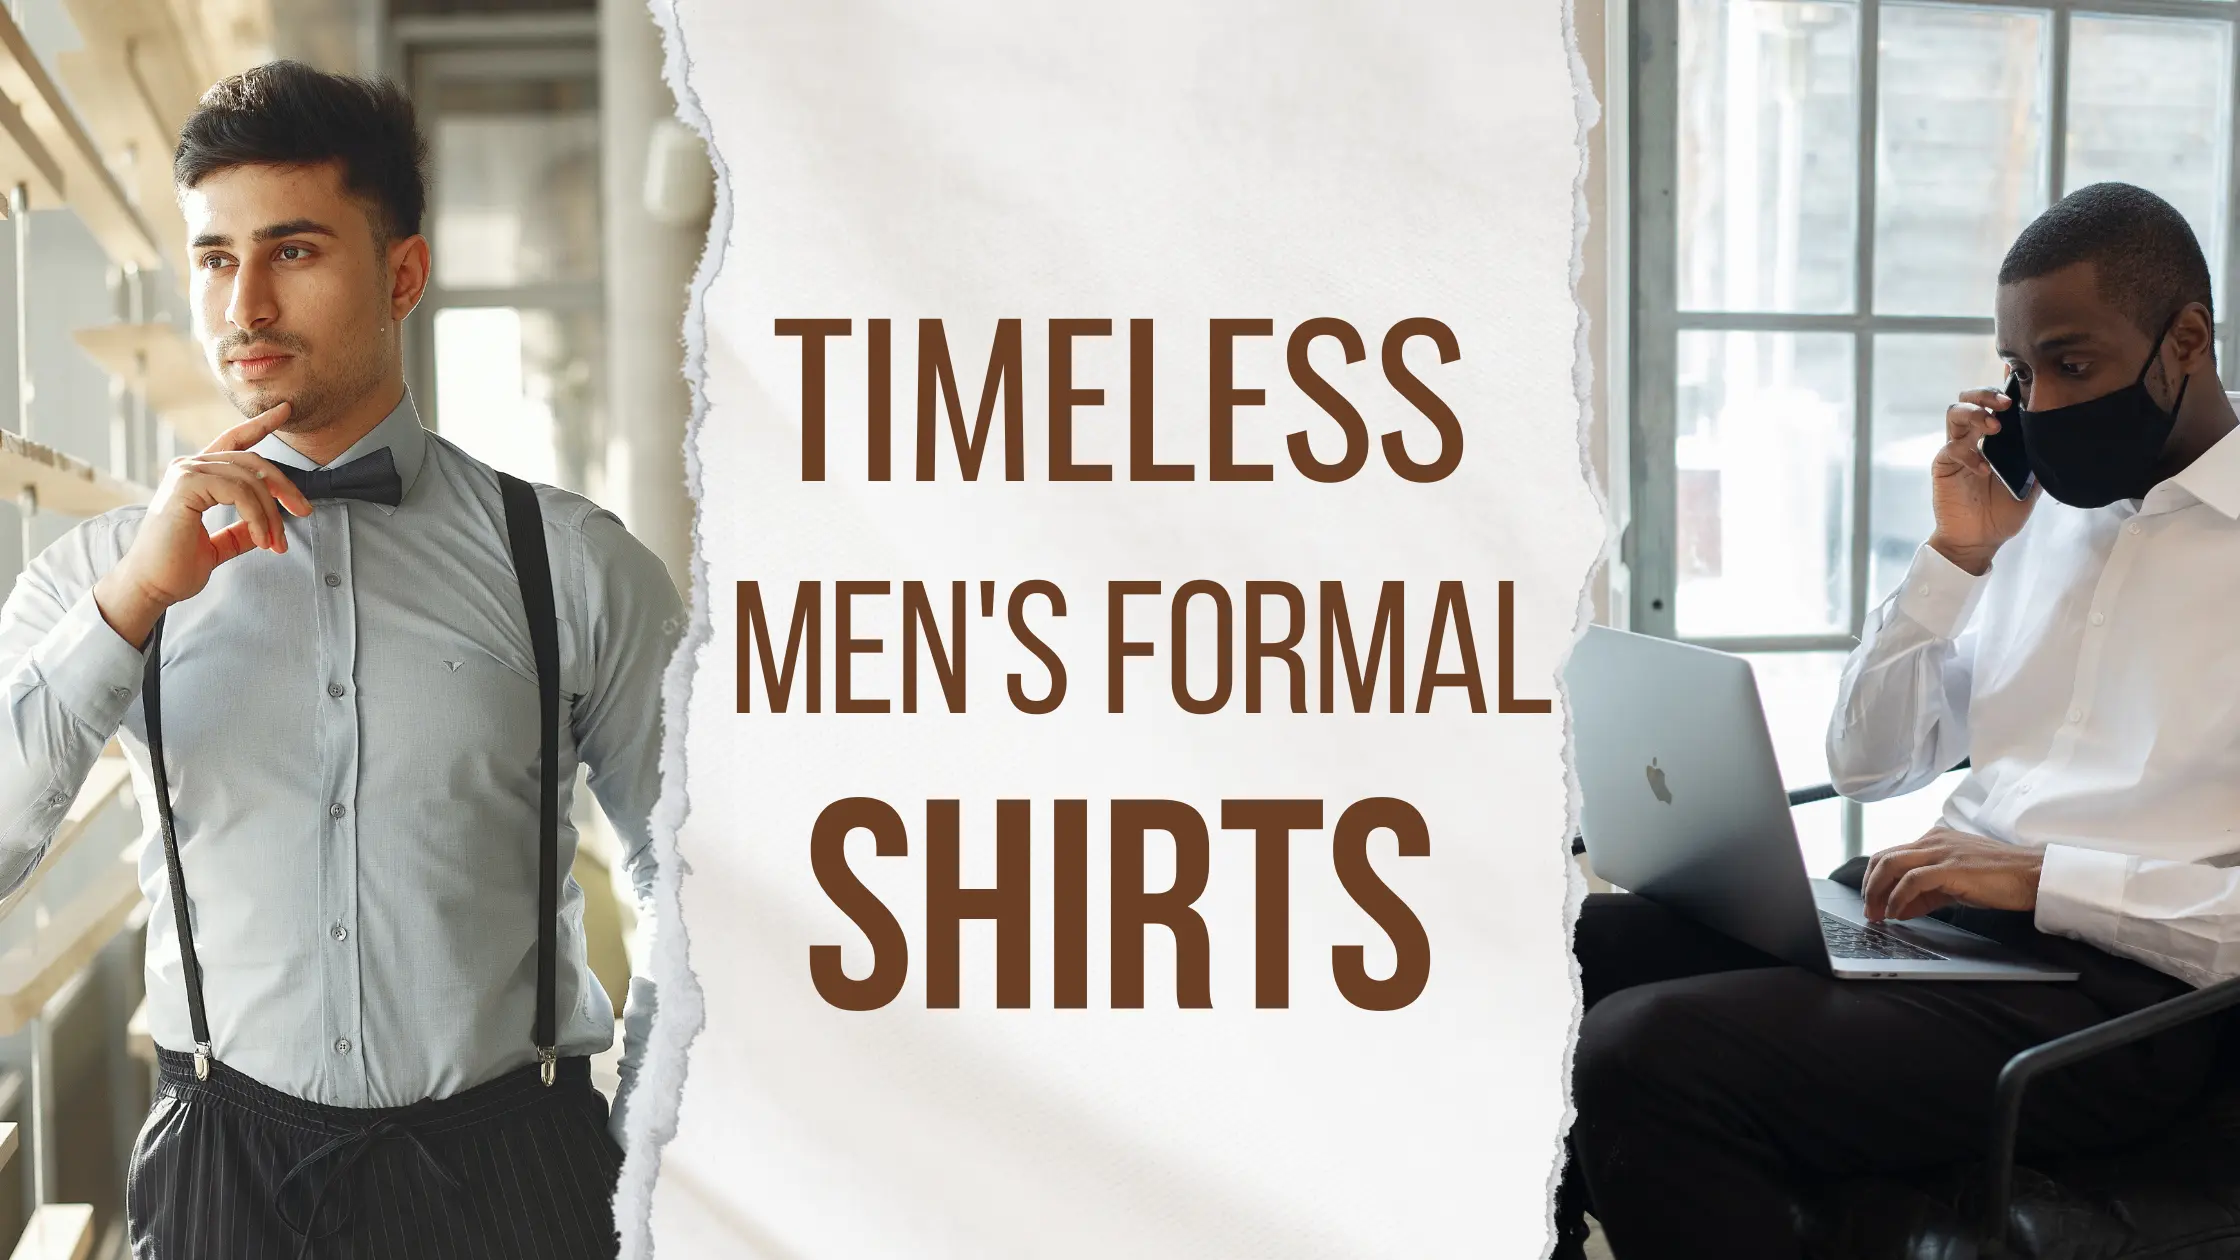 Timeless men's formal shirts.